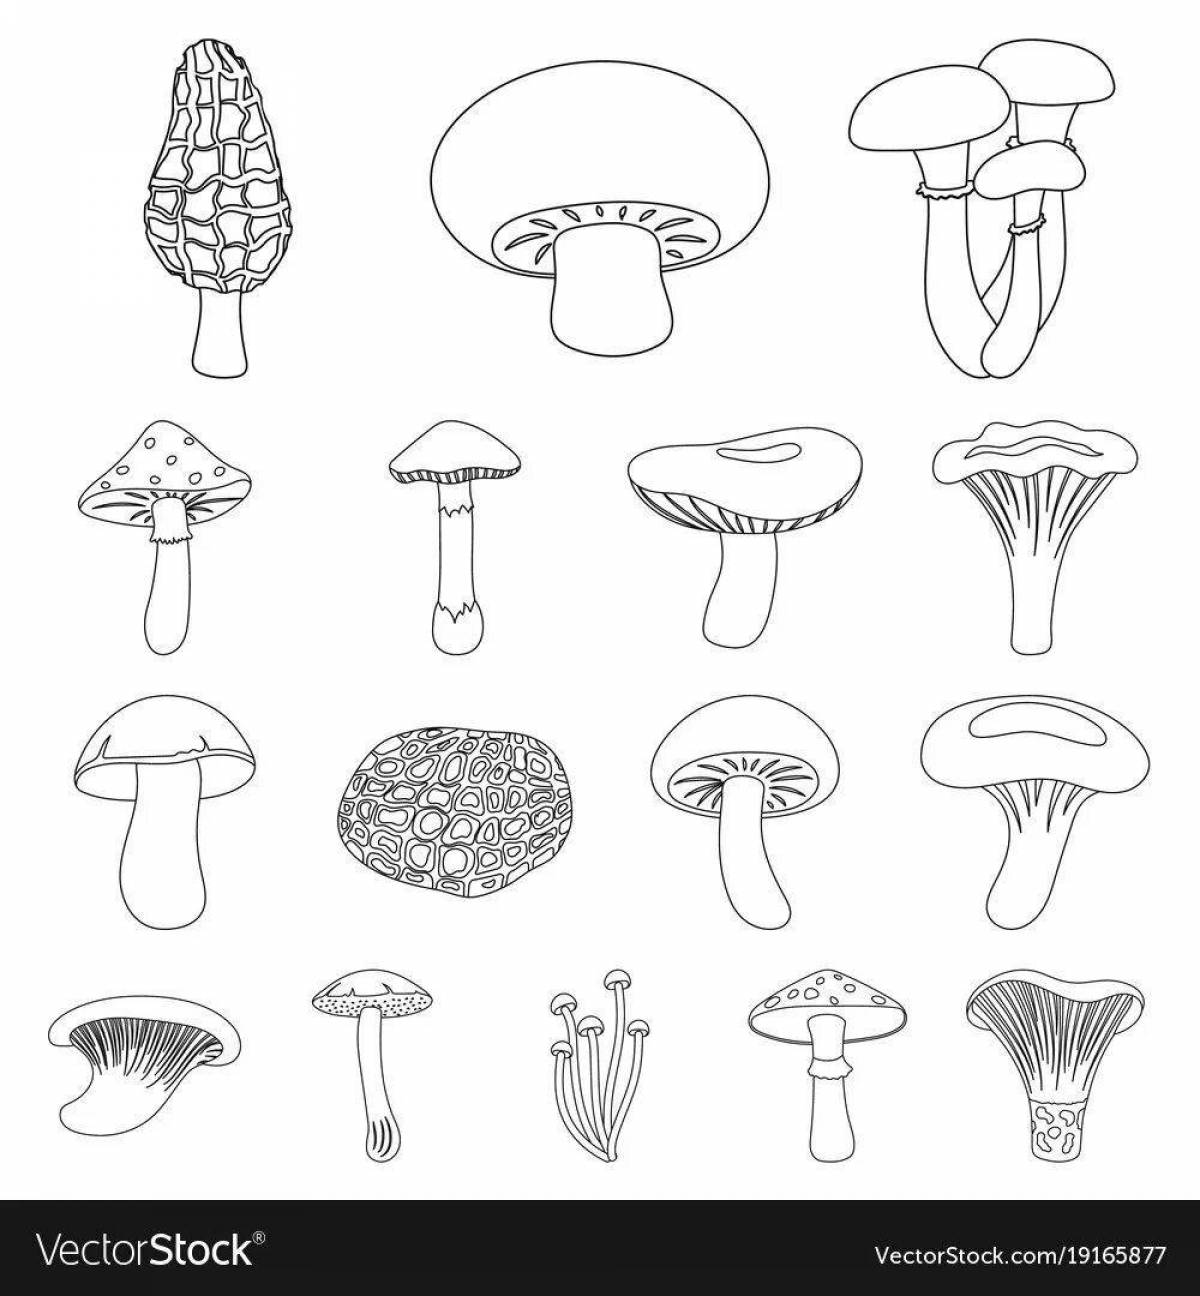 Terrible inedible mushrooms